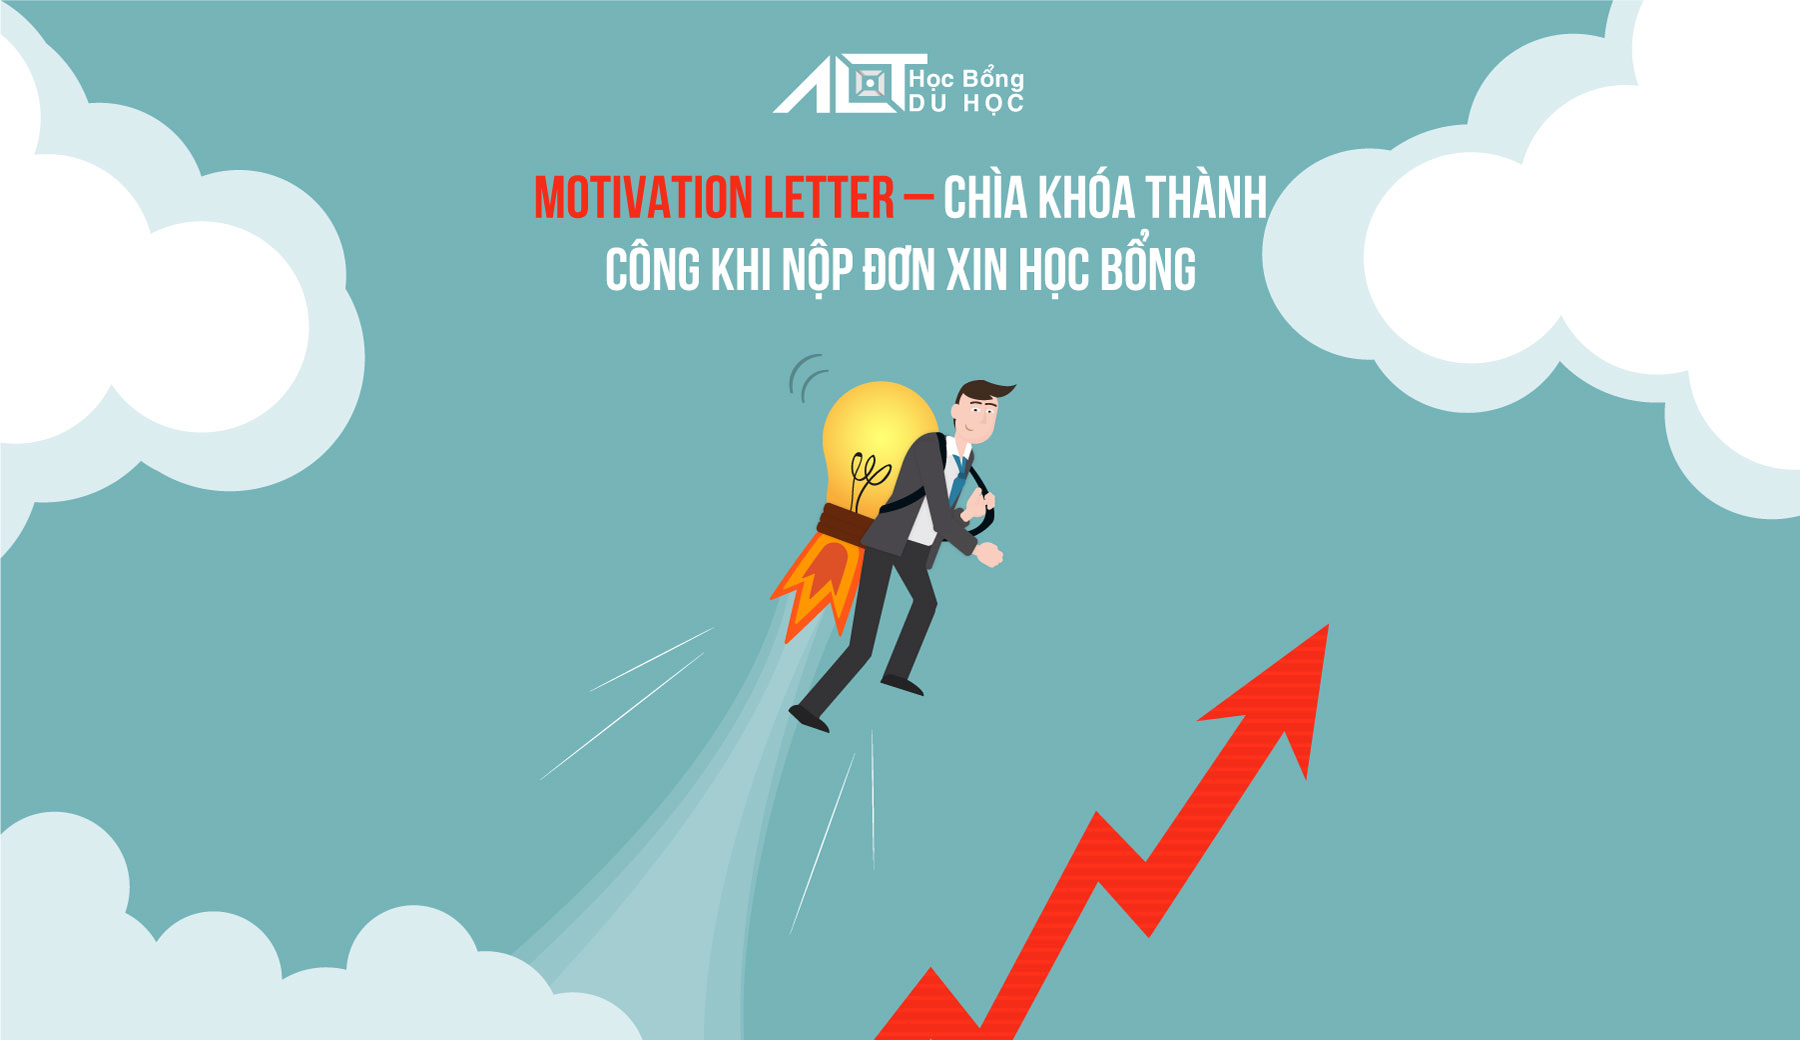 Motivation letter là gì - Cách viết motivation letter đúng chuẩn